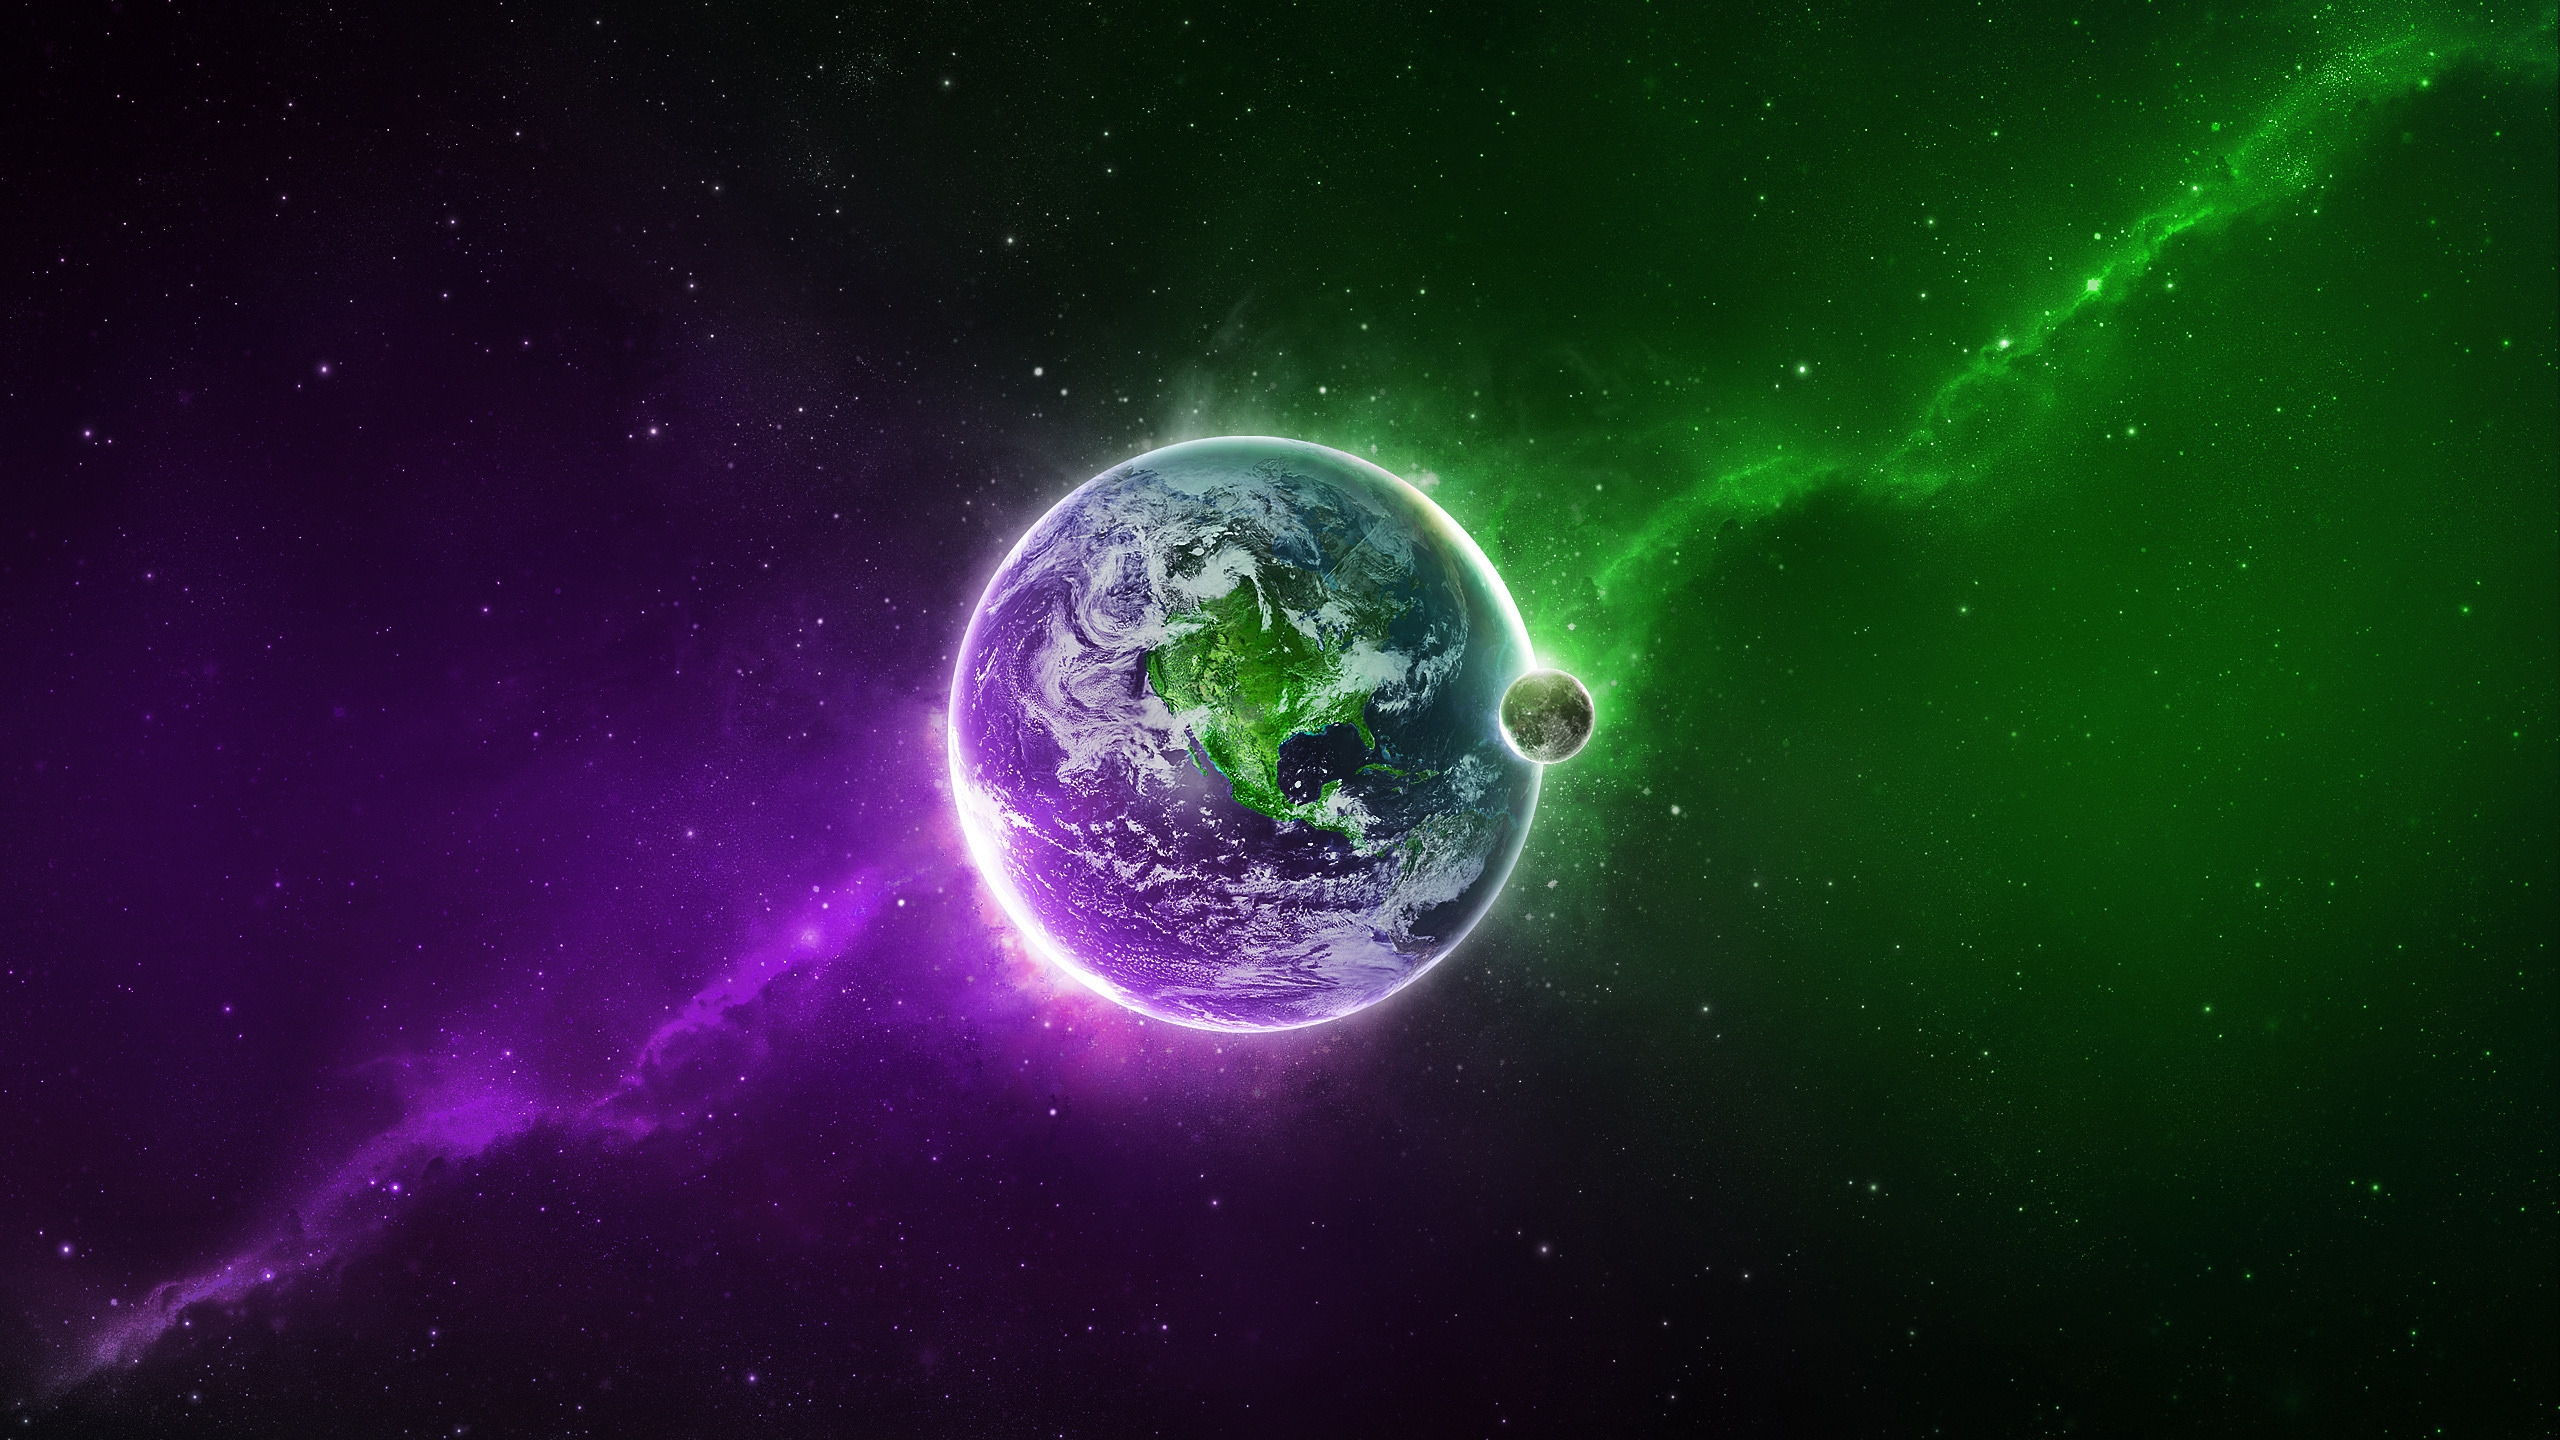 Purple versus Green for 2560x1440 HDTV resolution